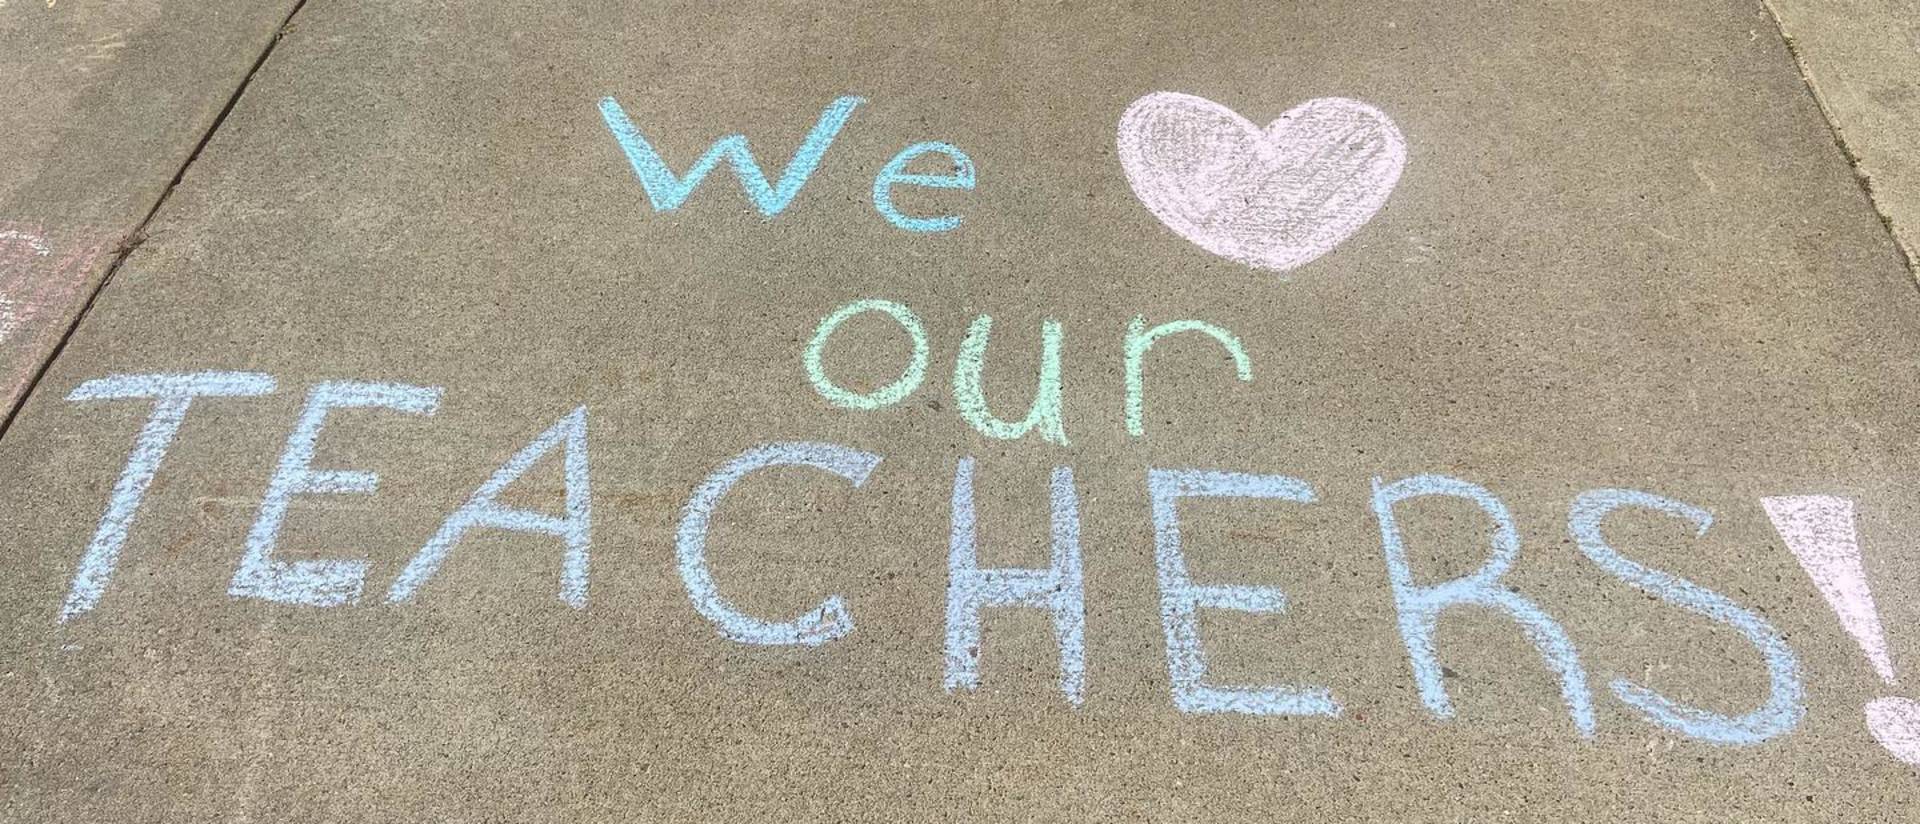 Sidewalk chalk art the says we heart our teachers